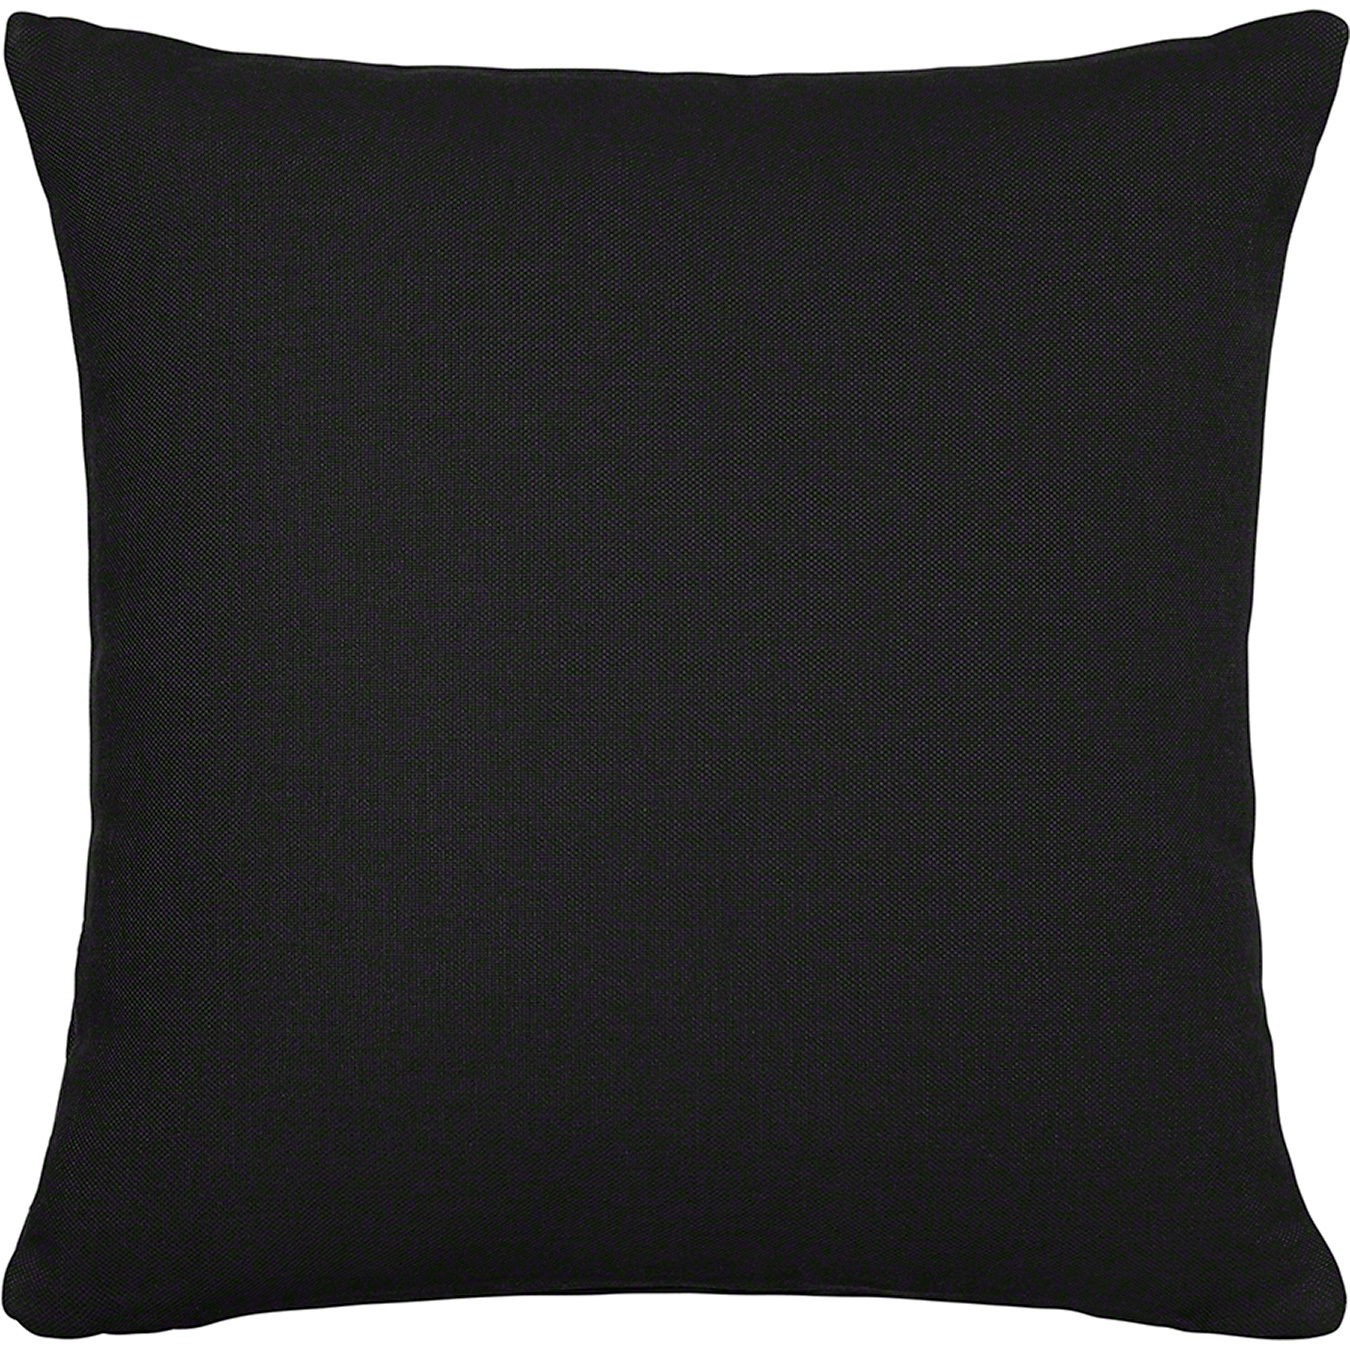 Supreme®/Jules Pansu Pillows (Set of 3) - Supreme Community